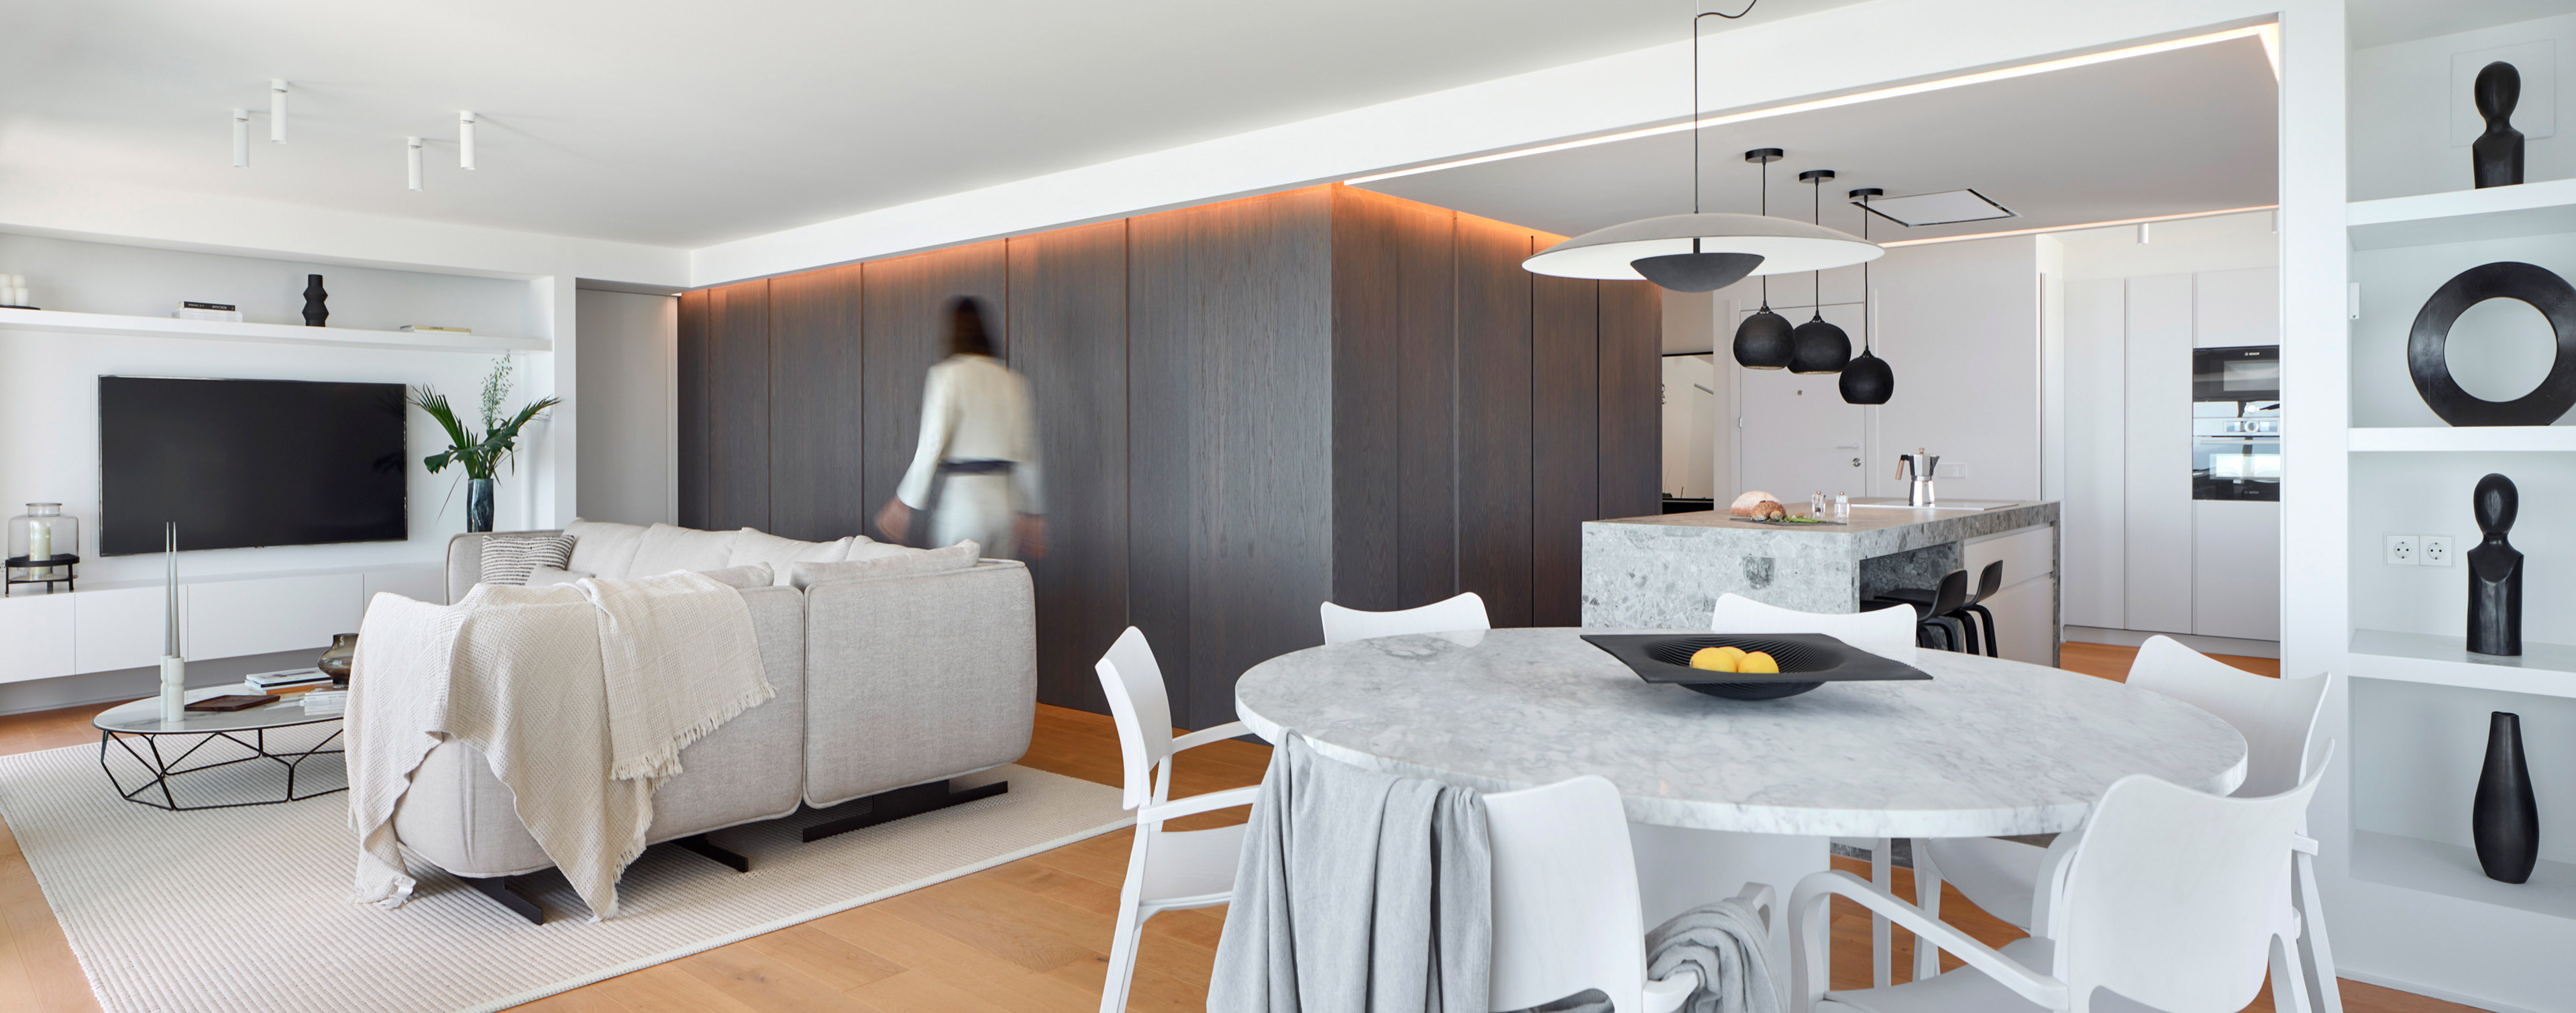 luv studio luxury architects sitges apartment IMG 01 - LUV Studio - Arquitectura y diseño - Barcelona